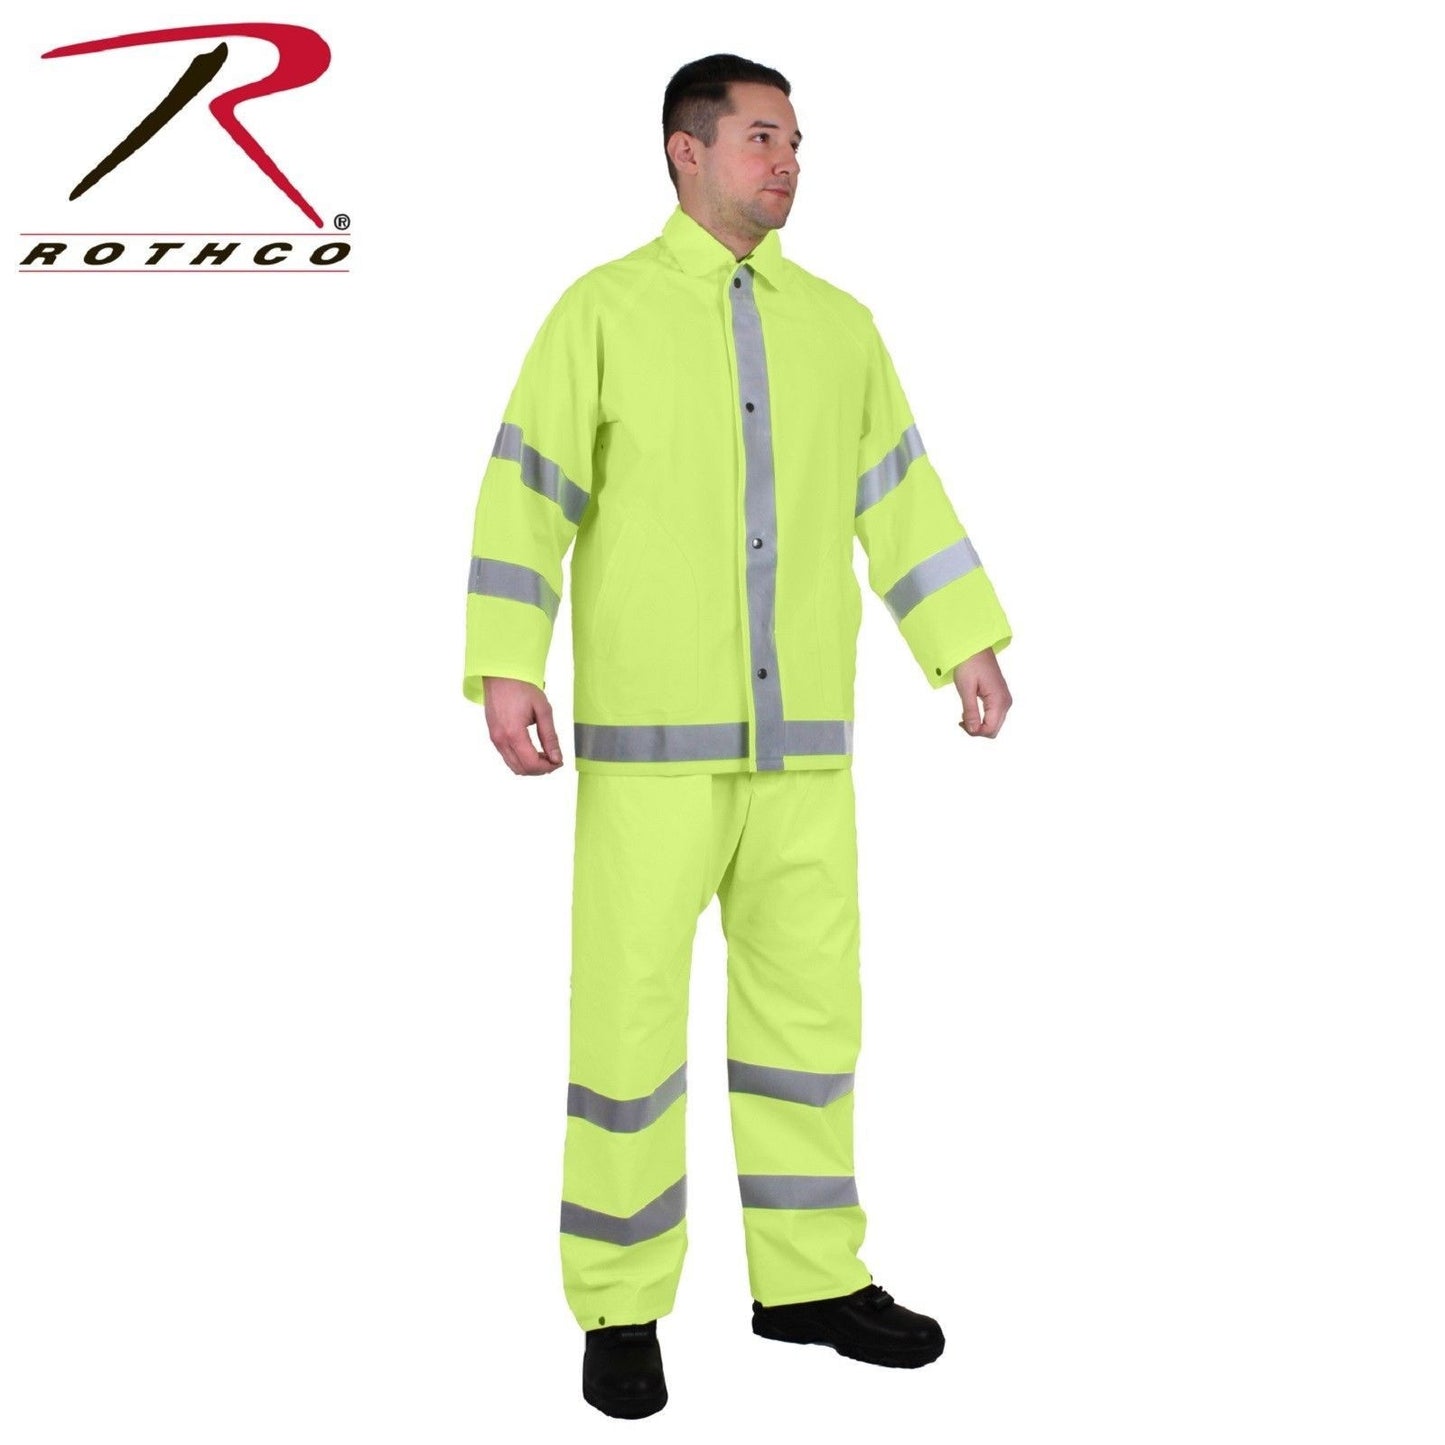 Waterproof Reflective Safety Rain Suit Jacket & Pants w/ Detachable Hood